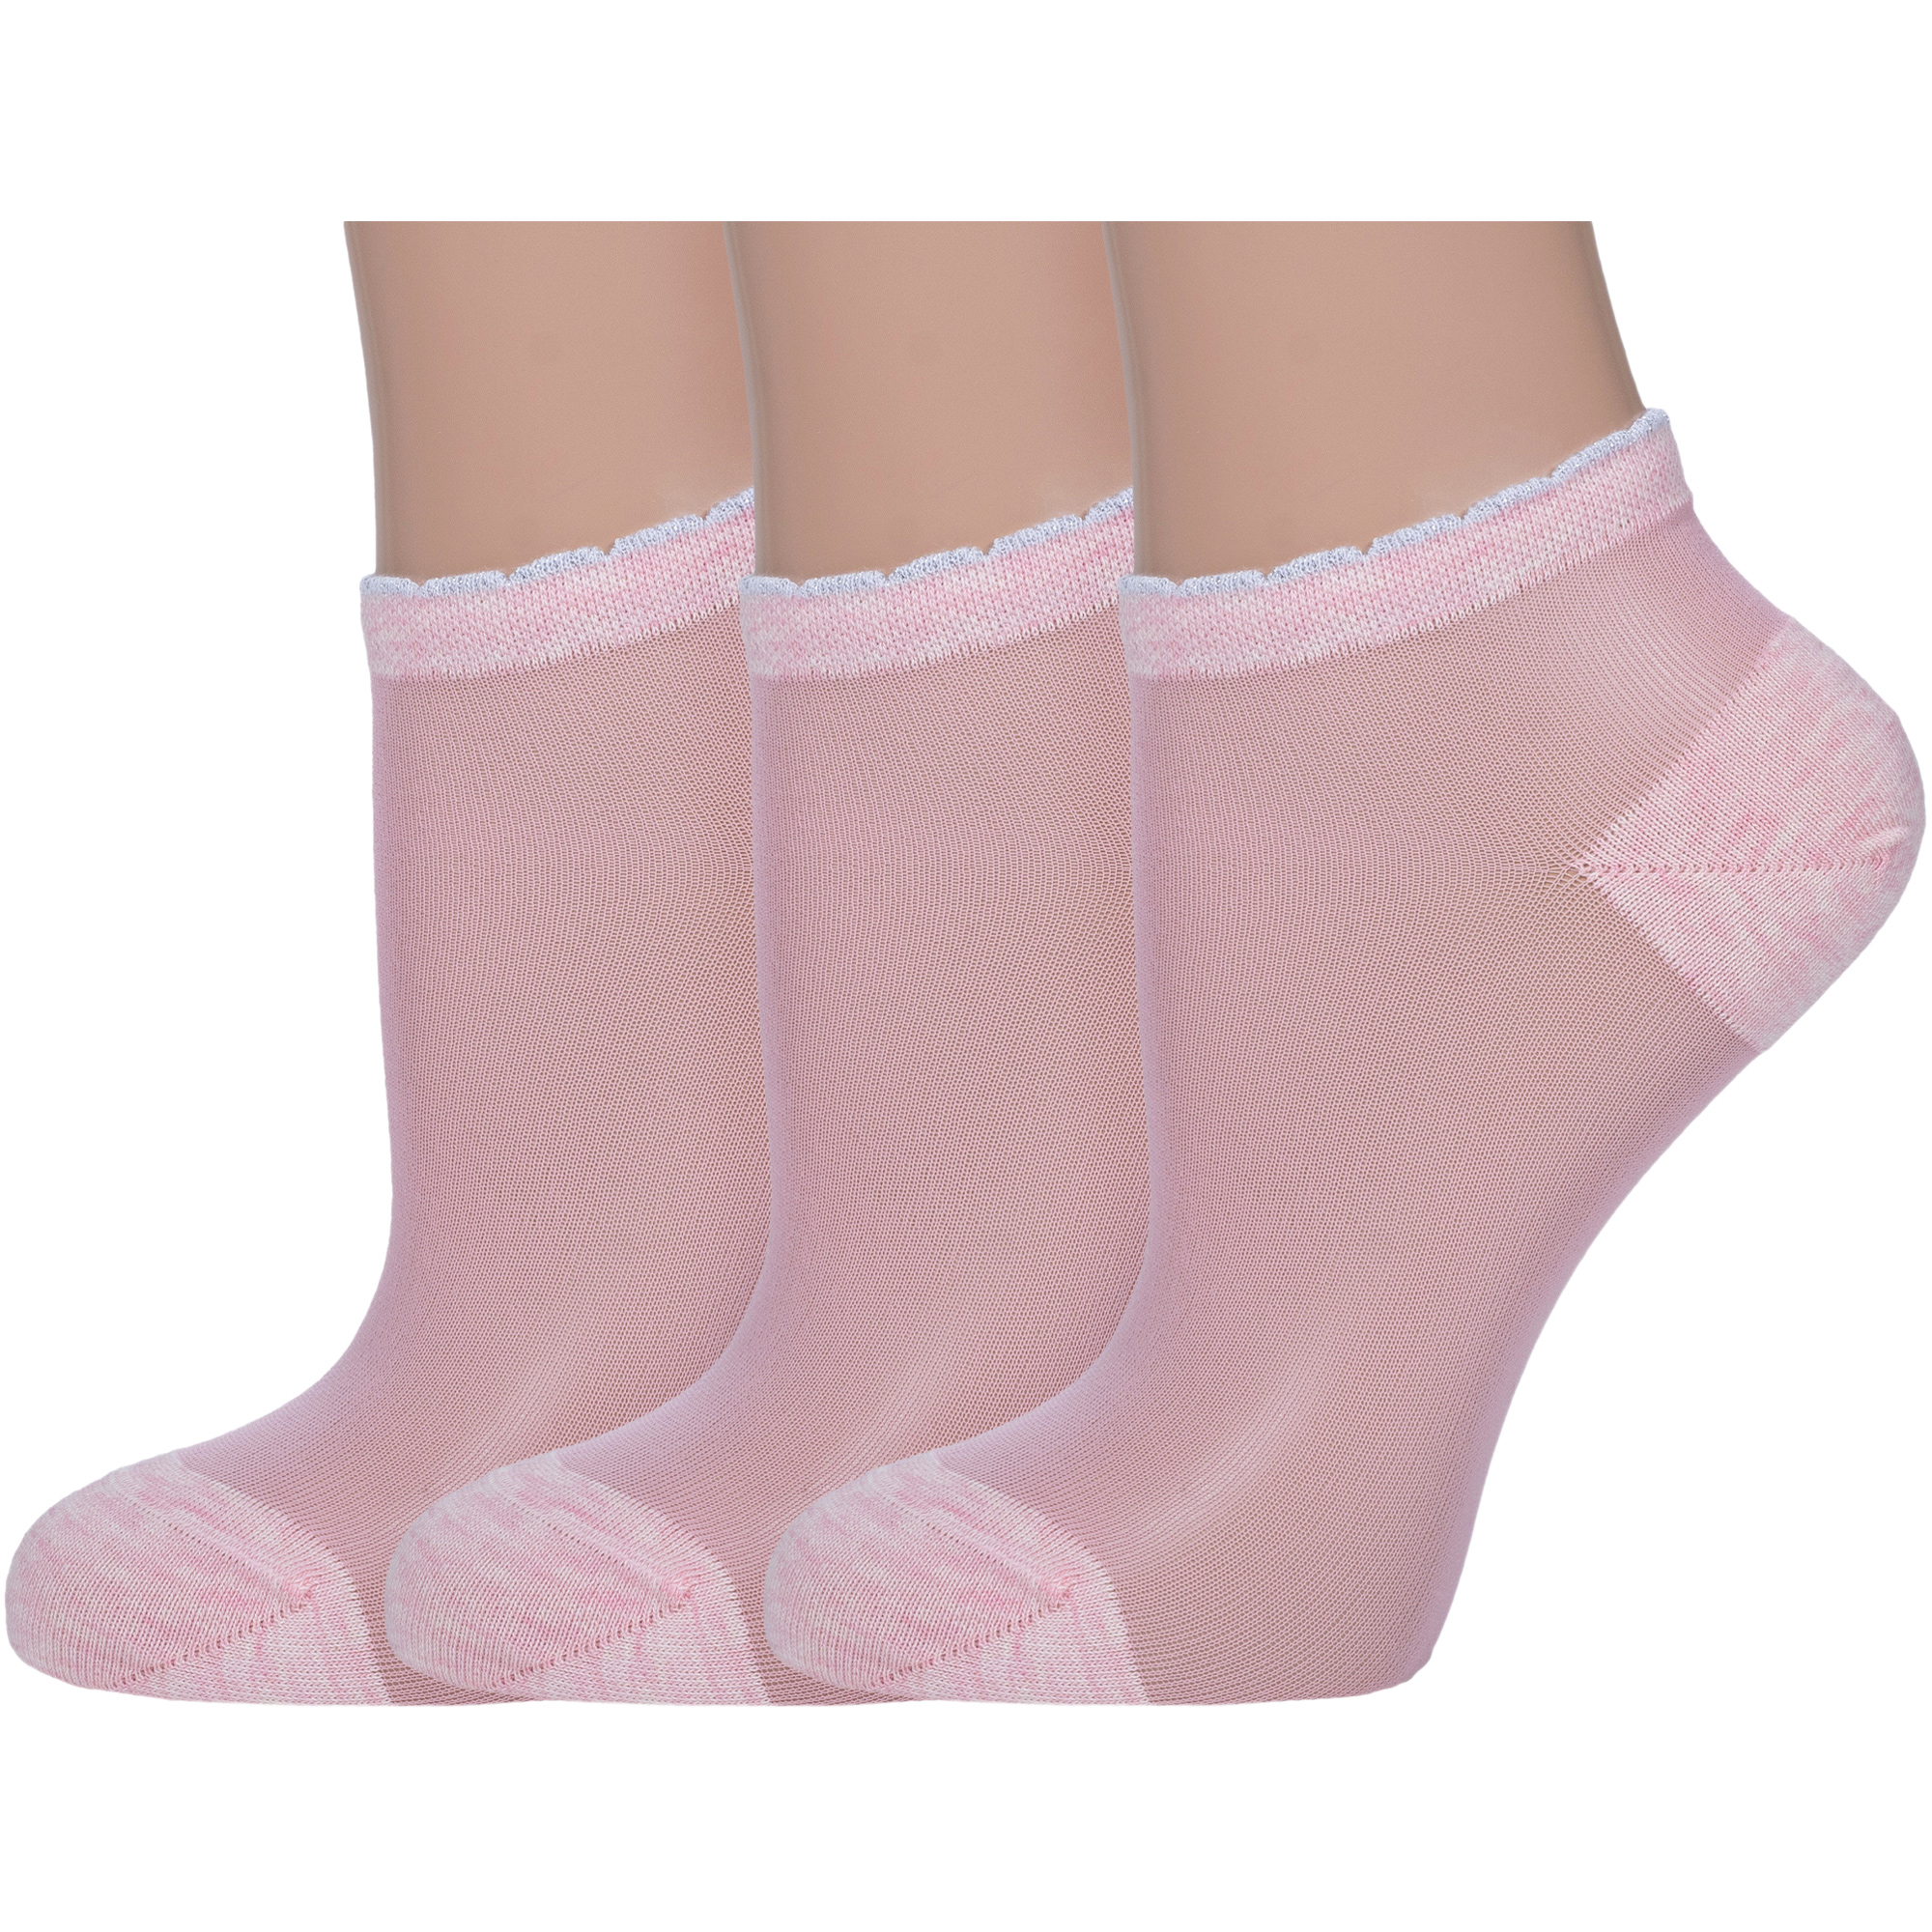 Комплект носков женских АКОС 3-FW41N18 розовых 25